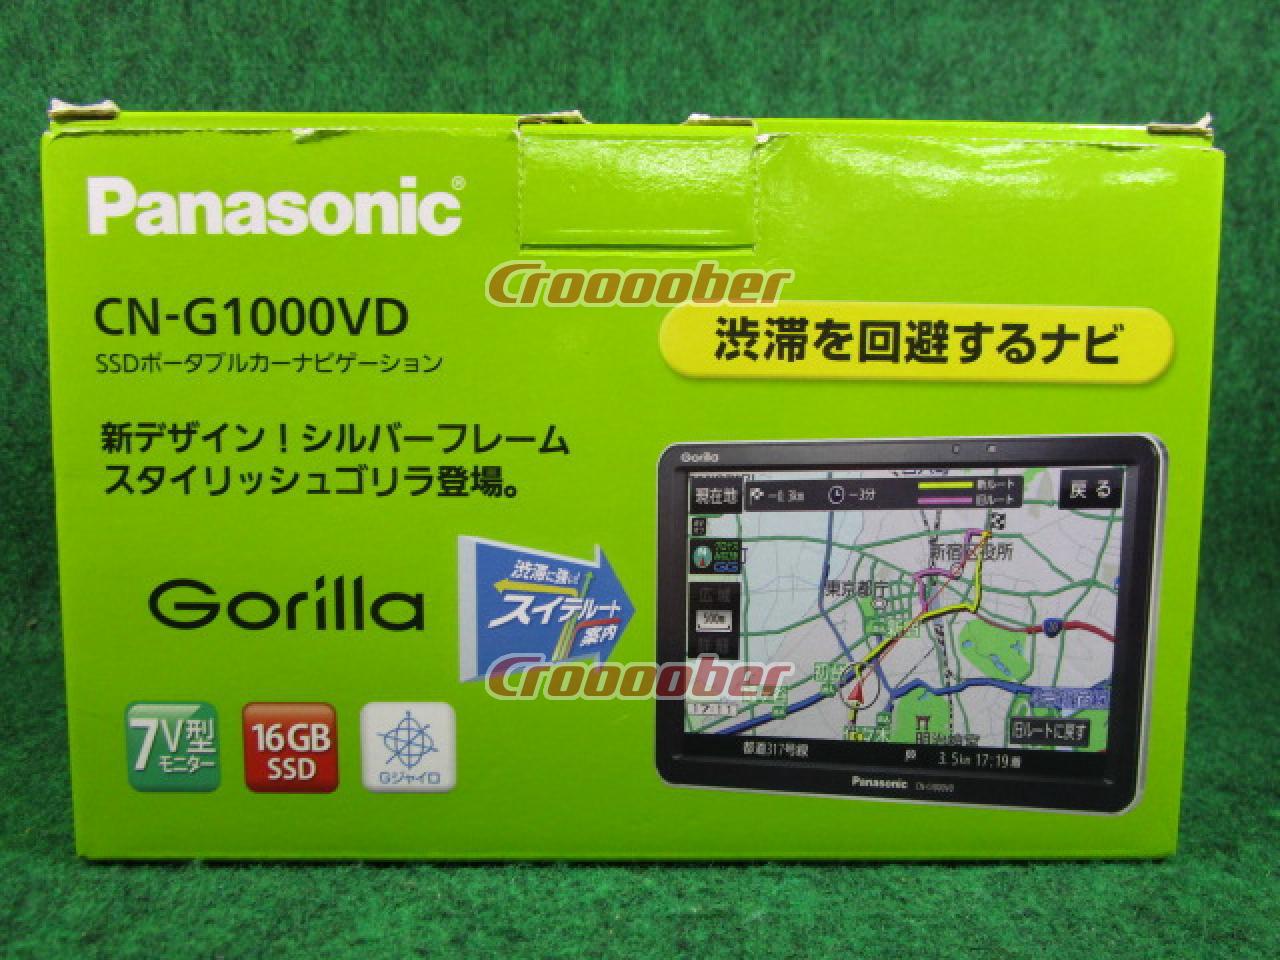 Panasonic CN-G1000VD(7V型 16GB SSBポータブルナビ) ☆VICS WIDE搭載 ...